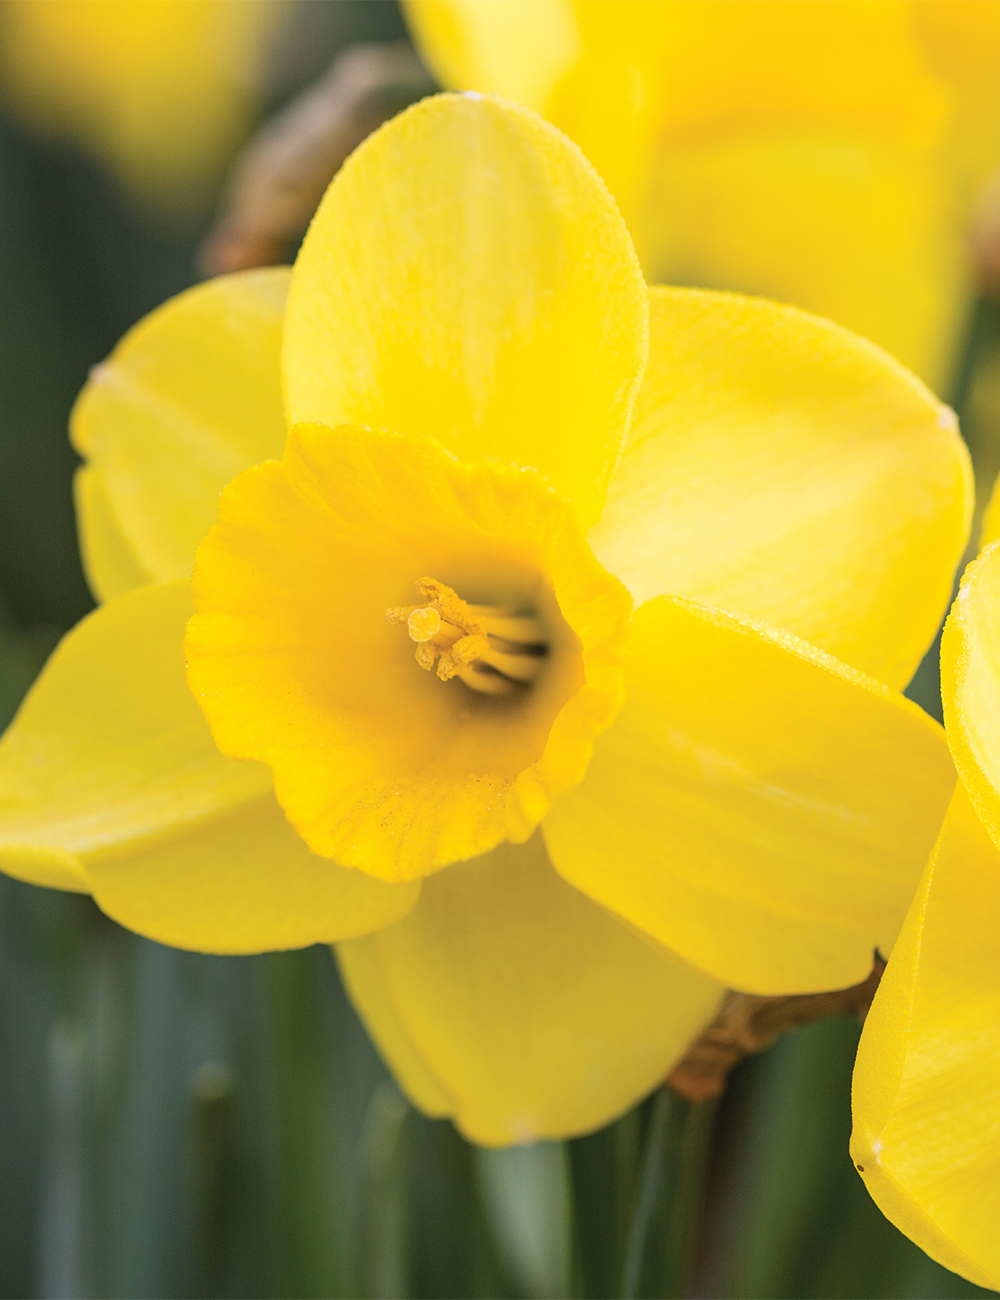 Daffodil Camelot